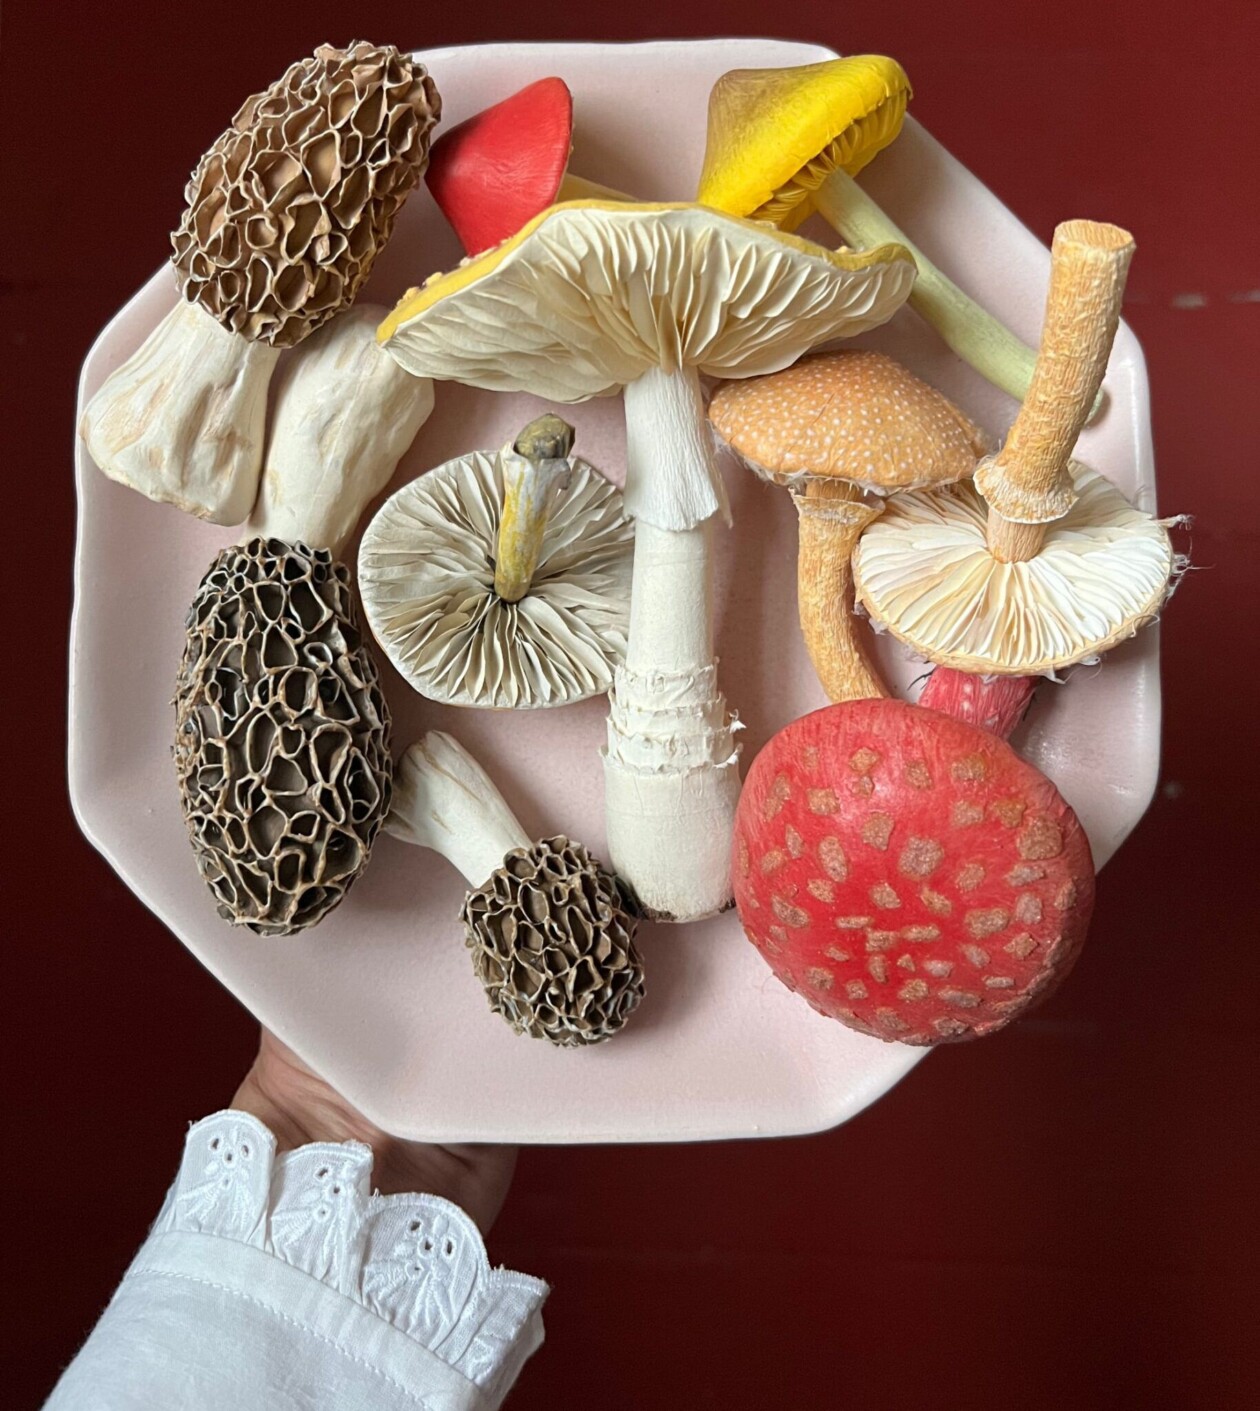 Splendid Lifelike Paper Sculptures Of Animals, Plants, Vegetables, And Mushrooms By ann Wood (6)